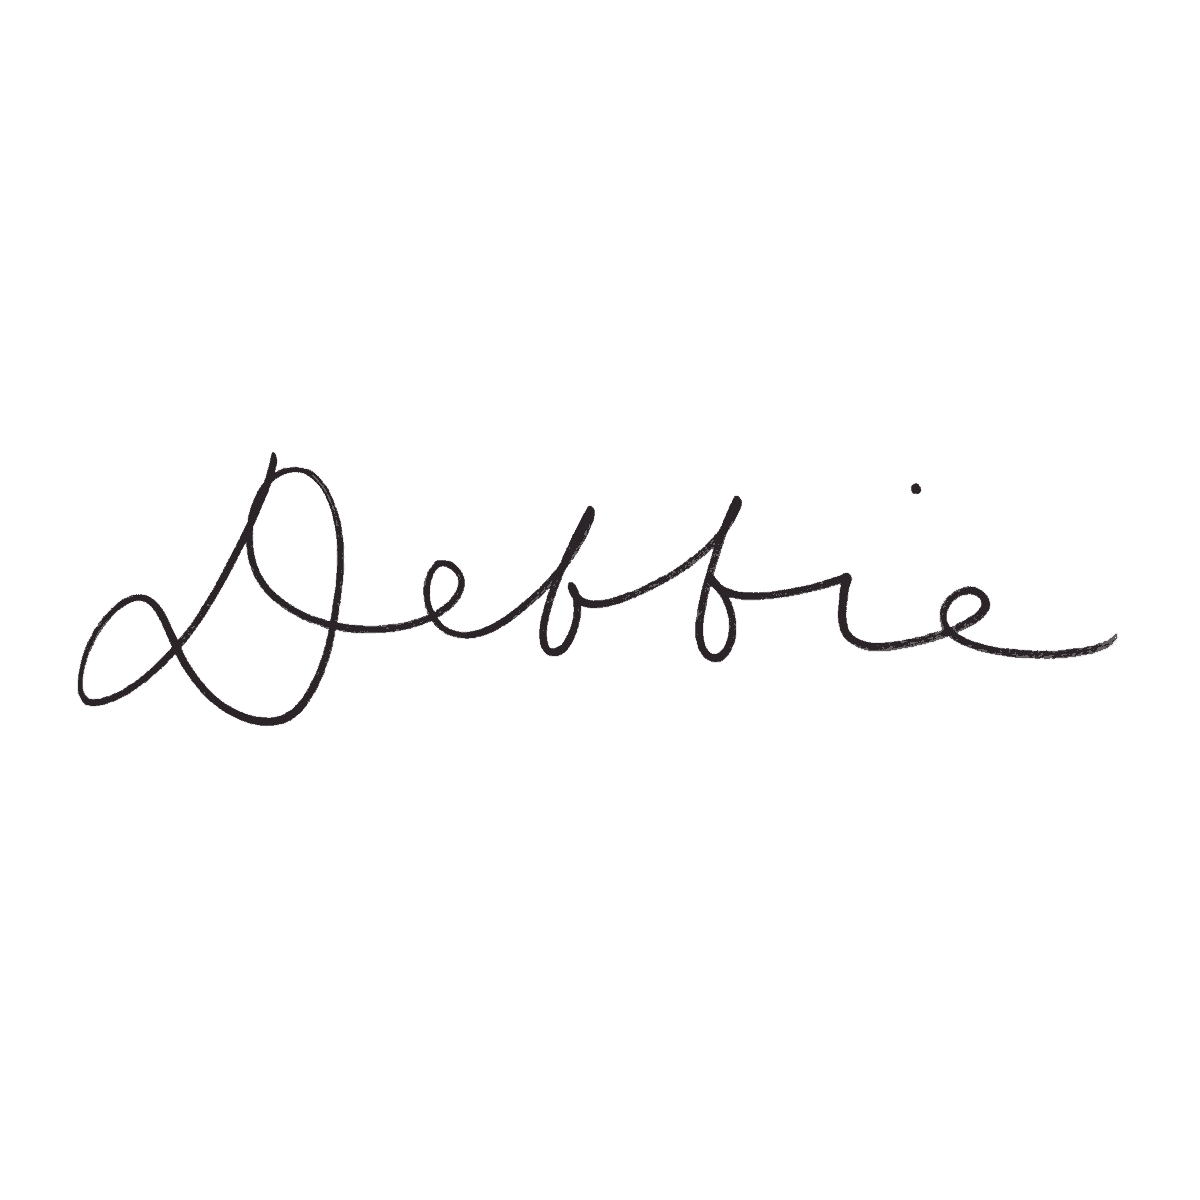 handwritten version of my name "Debbie"